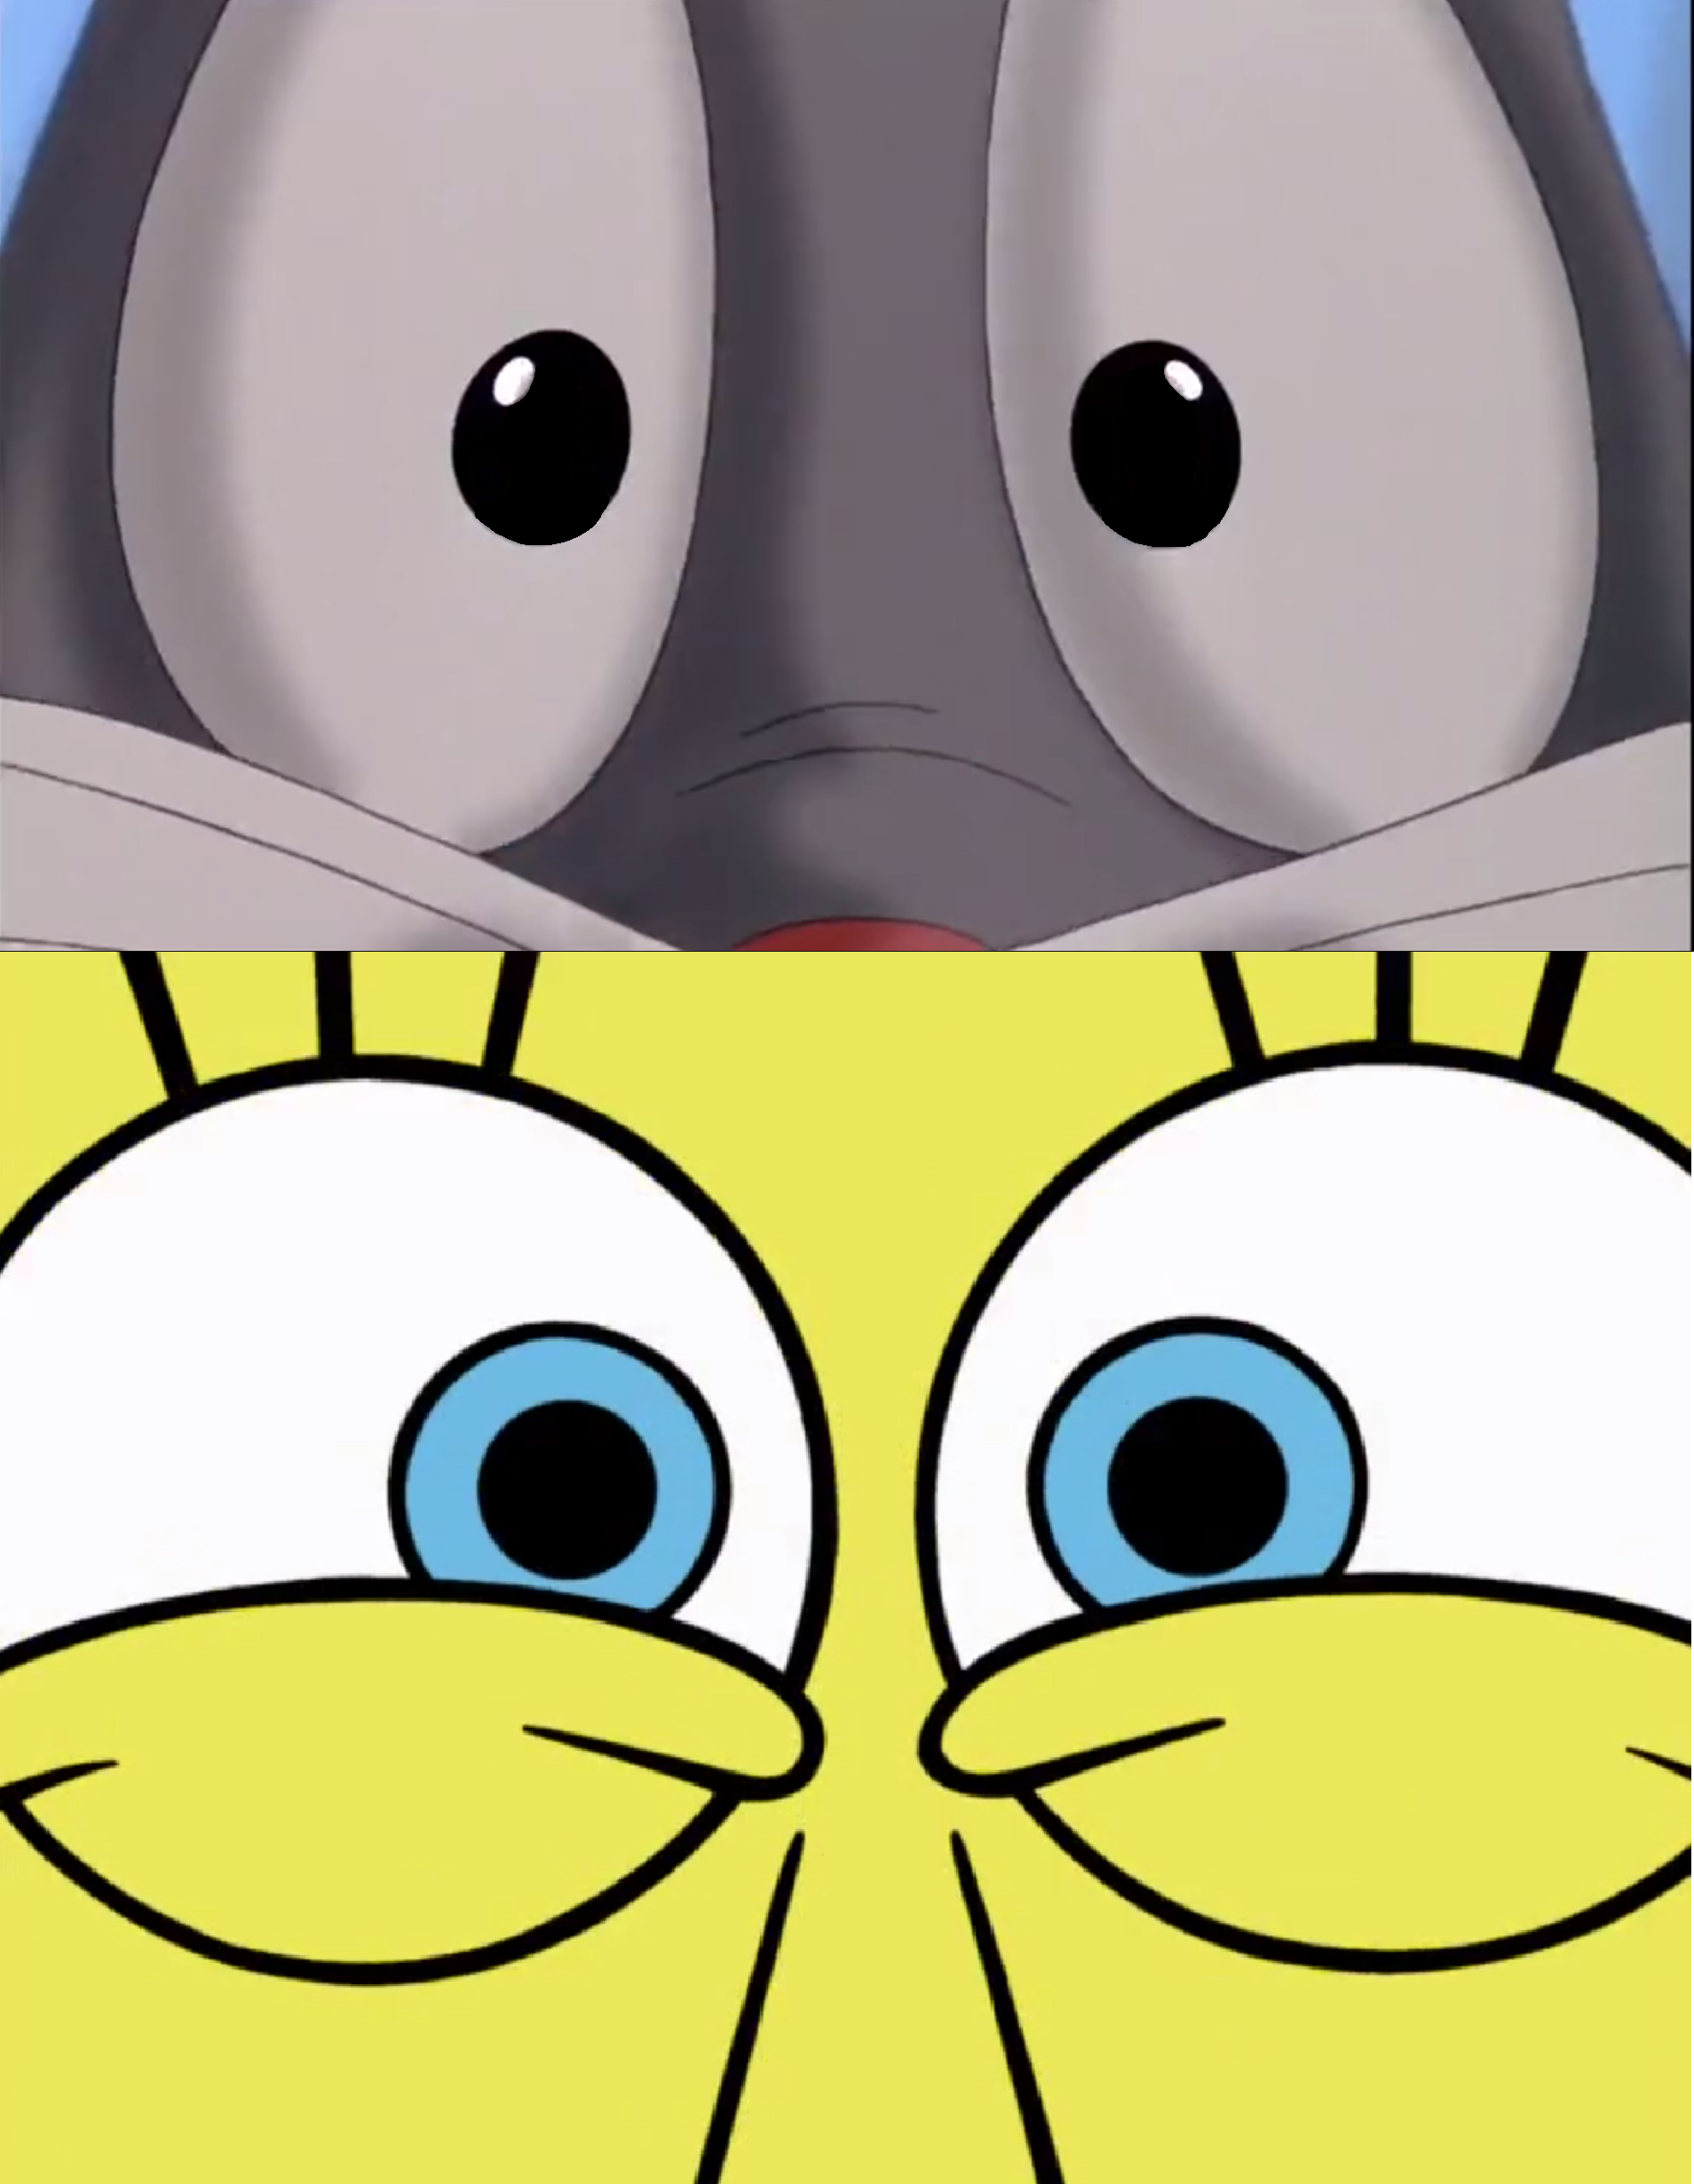 SpongeBob SquarePants Faces, Gorillaz